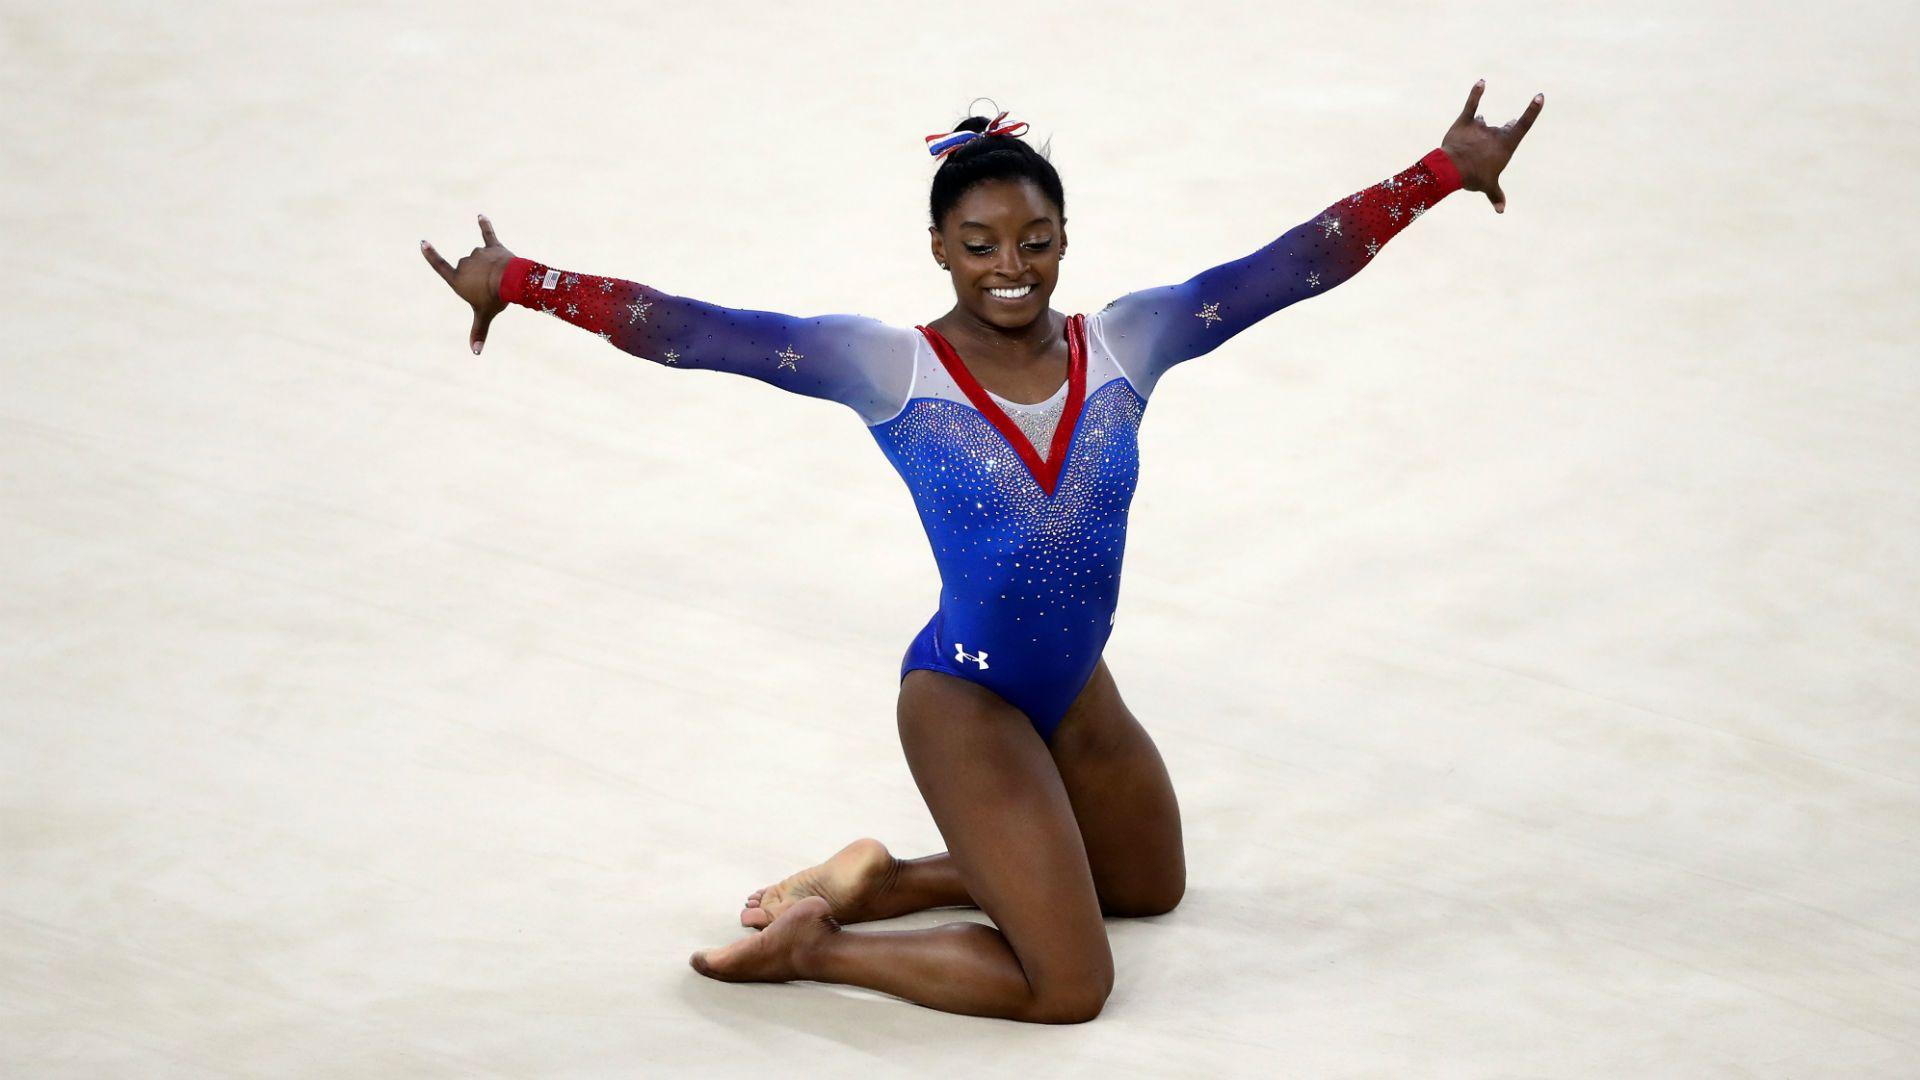 Rio Olympics 2016: Simone Biles wins floor exercise, fourth gold